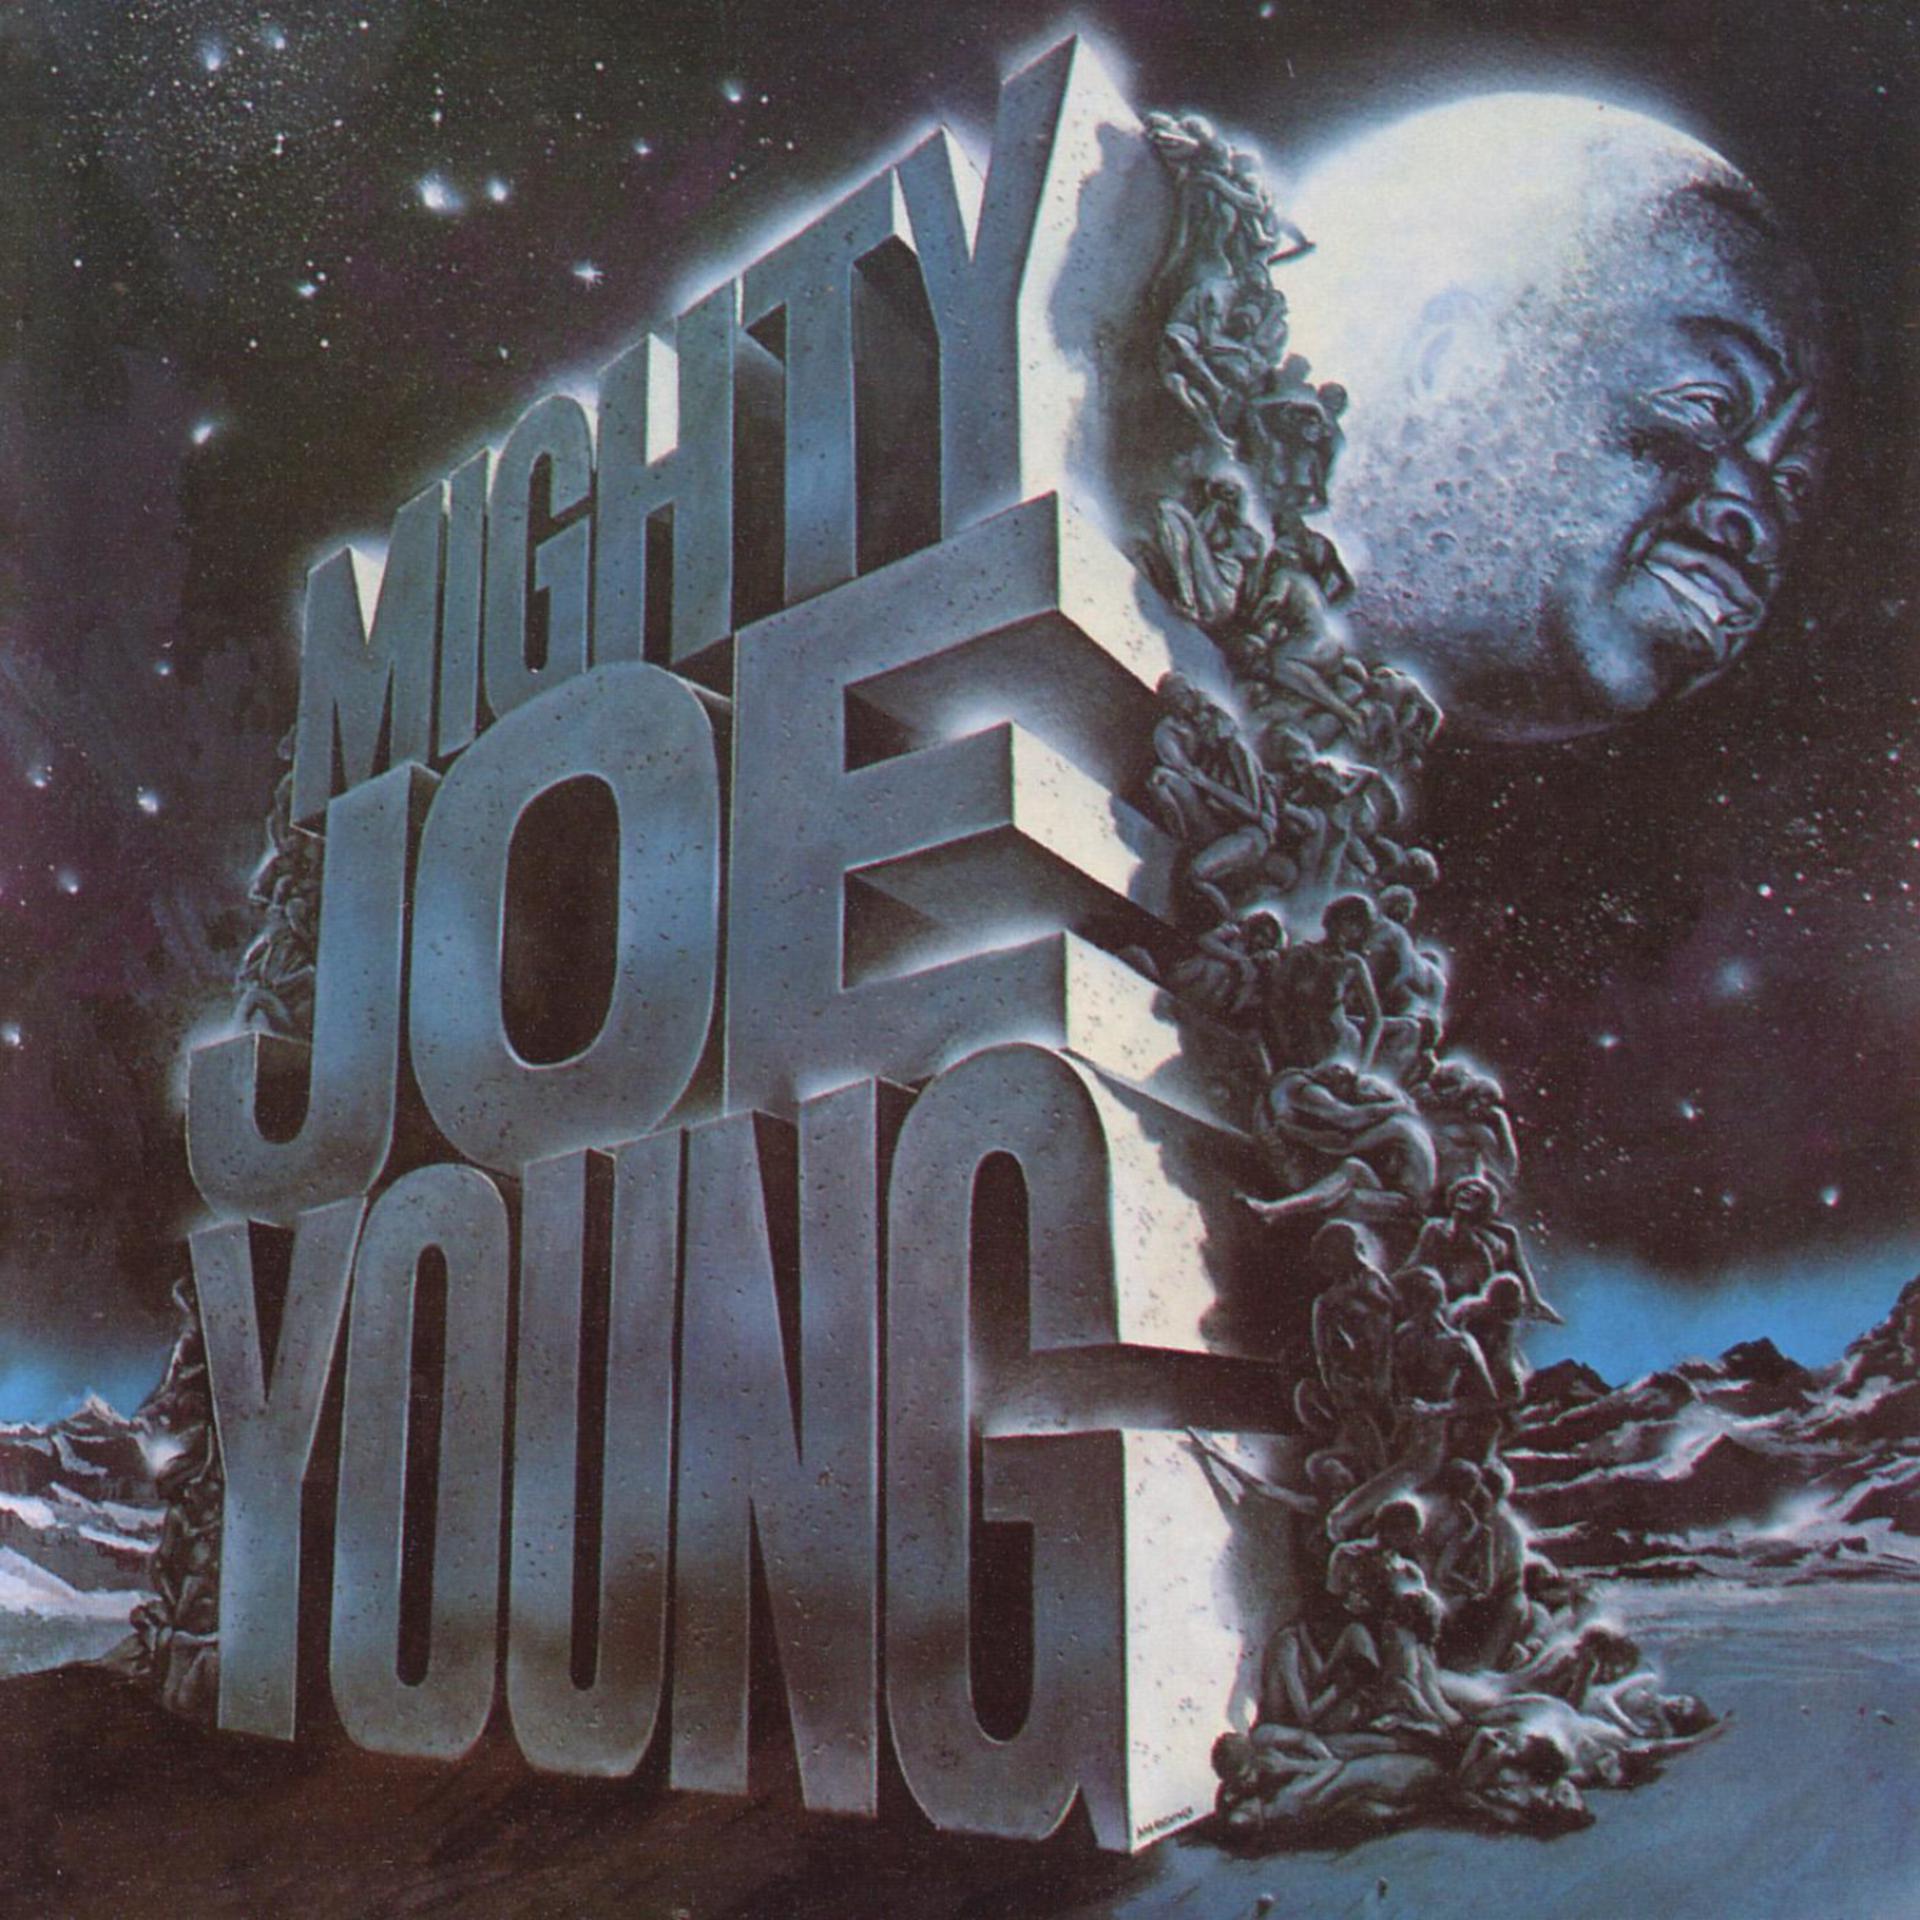 Постер альбома Mighty Joe Young